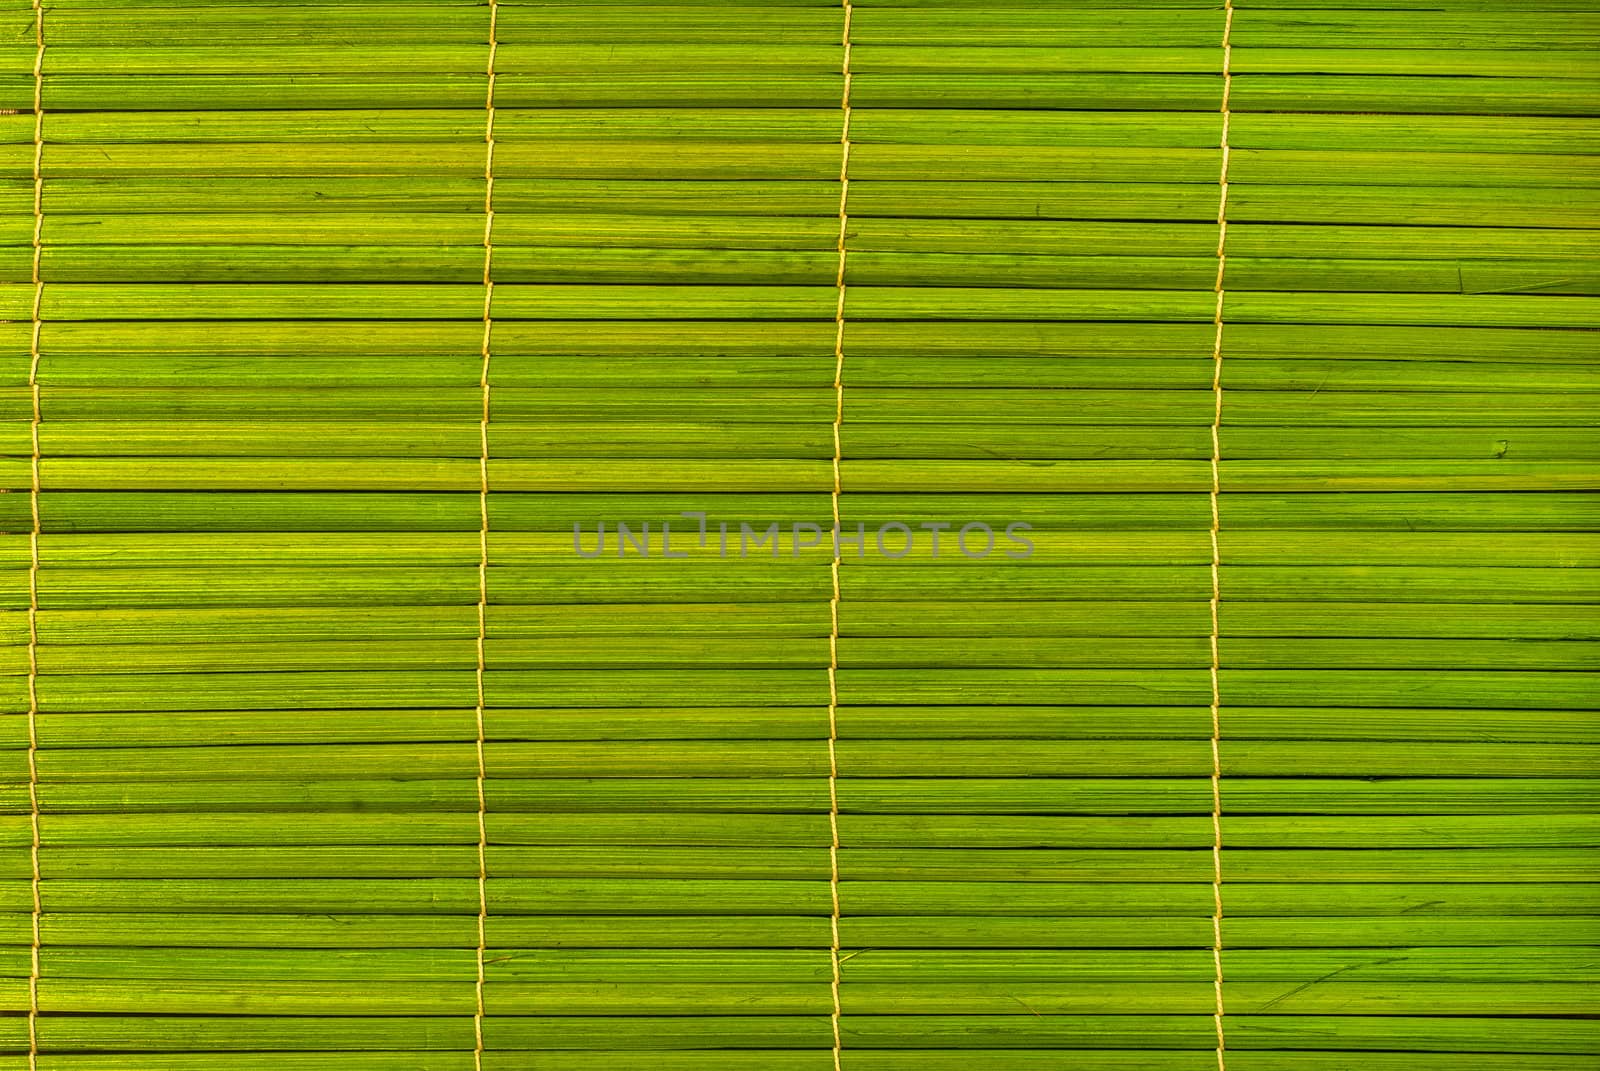 Green reed mat texture closeup as background